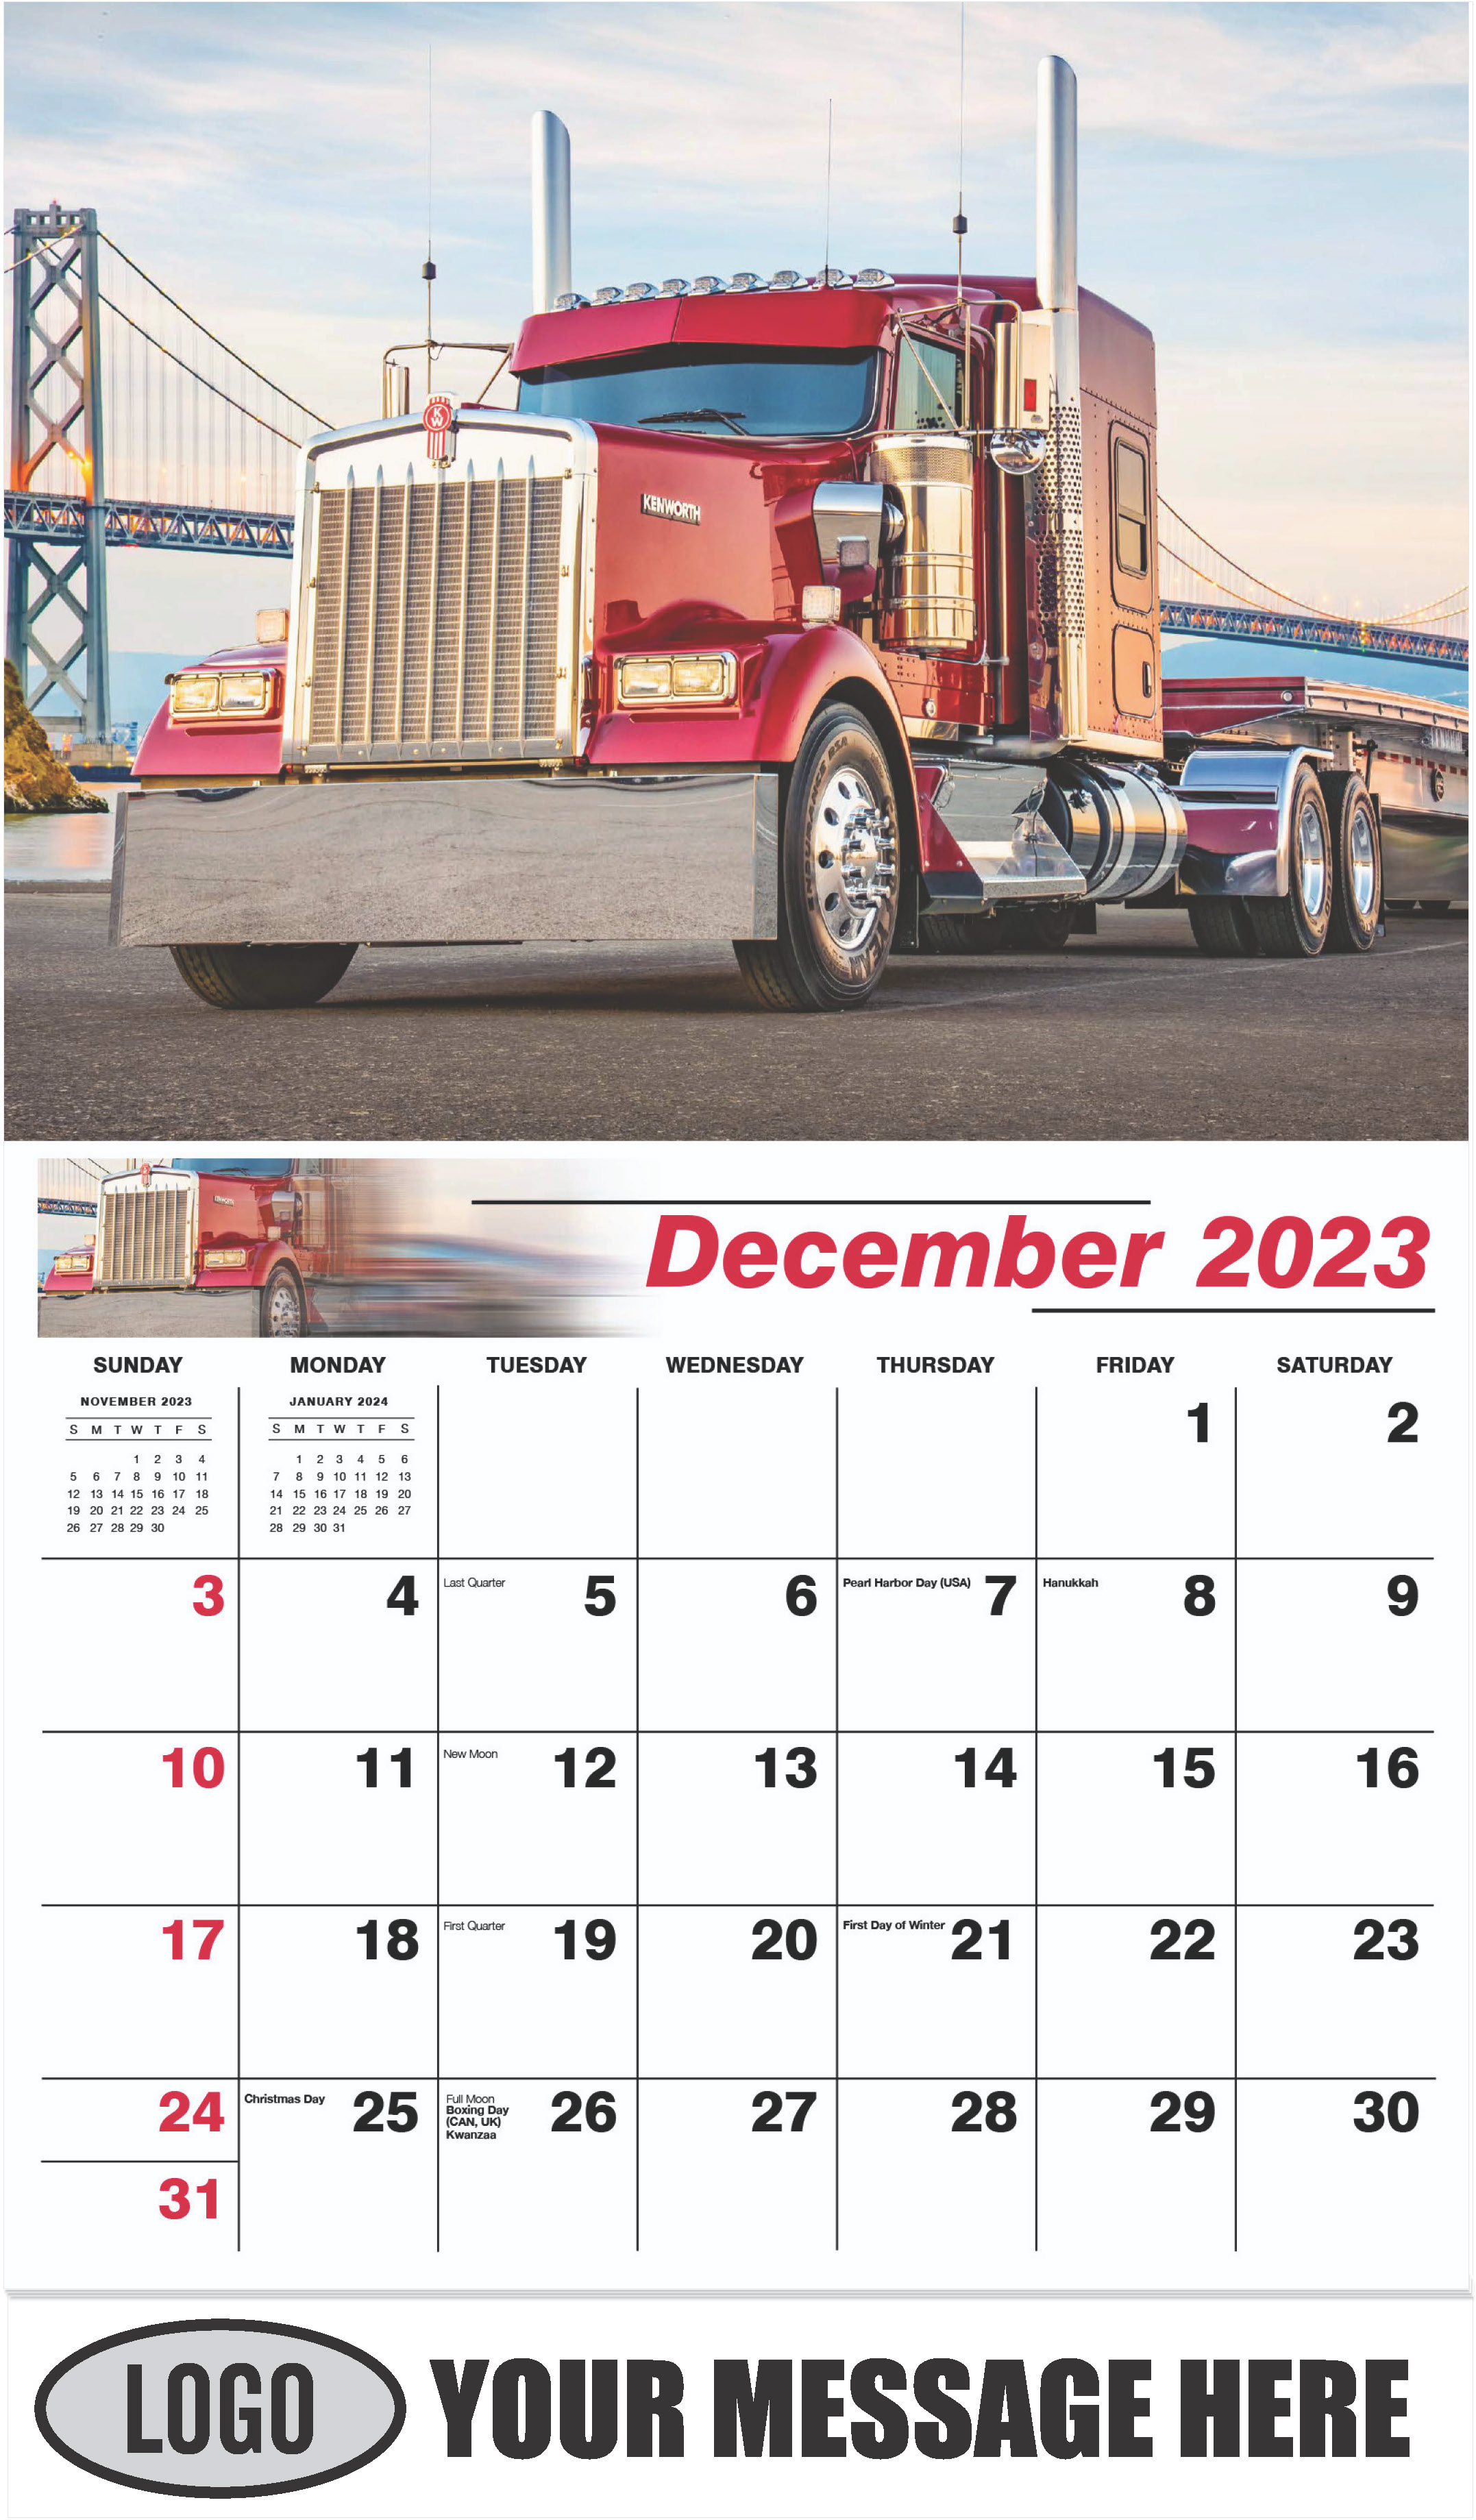 2019 Kenworth W900L - December 2023 - Kings of the Road 2023 Promotional Calendar